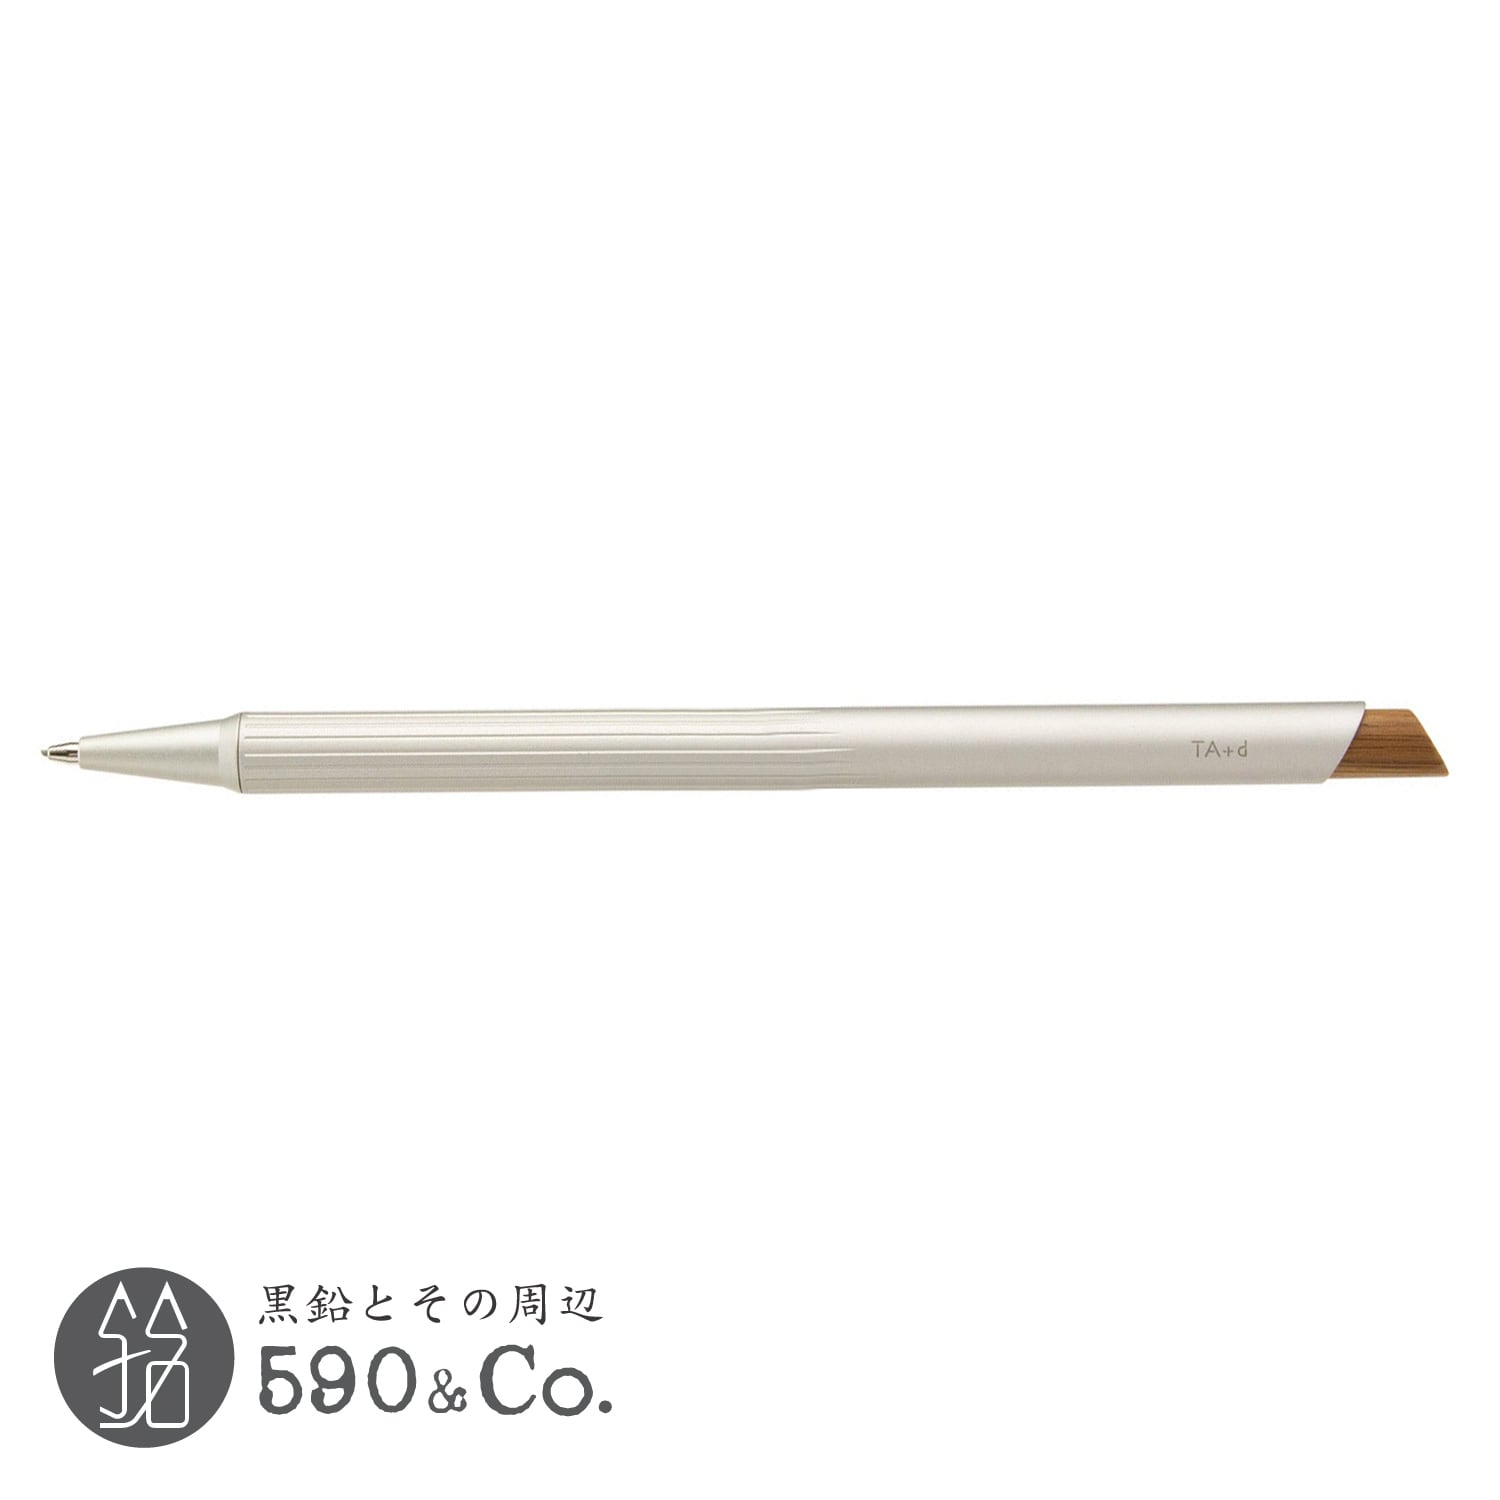 【TreAsia Design/TA+d】FIBER Bamboo Mechanical Pencil (シルバー) 590Co.